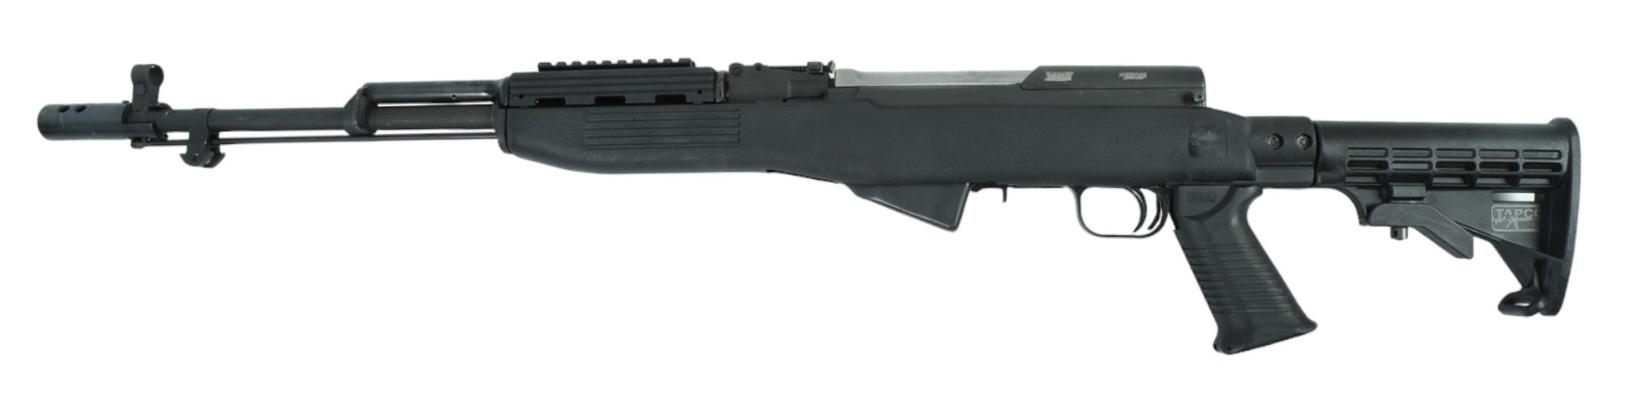 Sporterized Russian 1950 Tula SKS-45 7.62x39MM Semi-auto Rifle FFL Required: CCCP20267 (NBW)